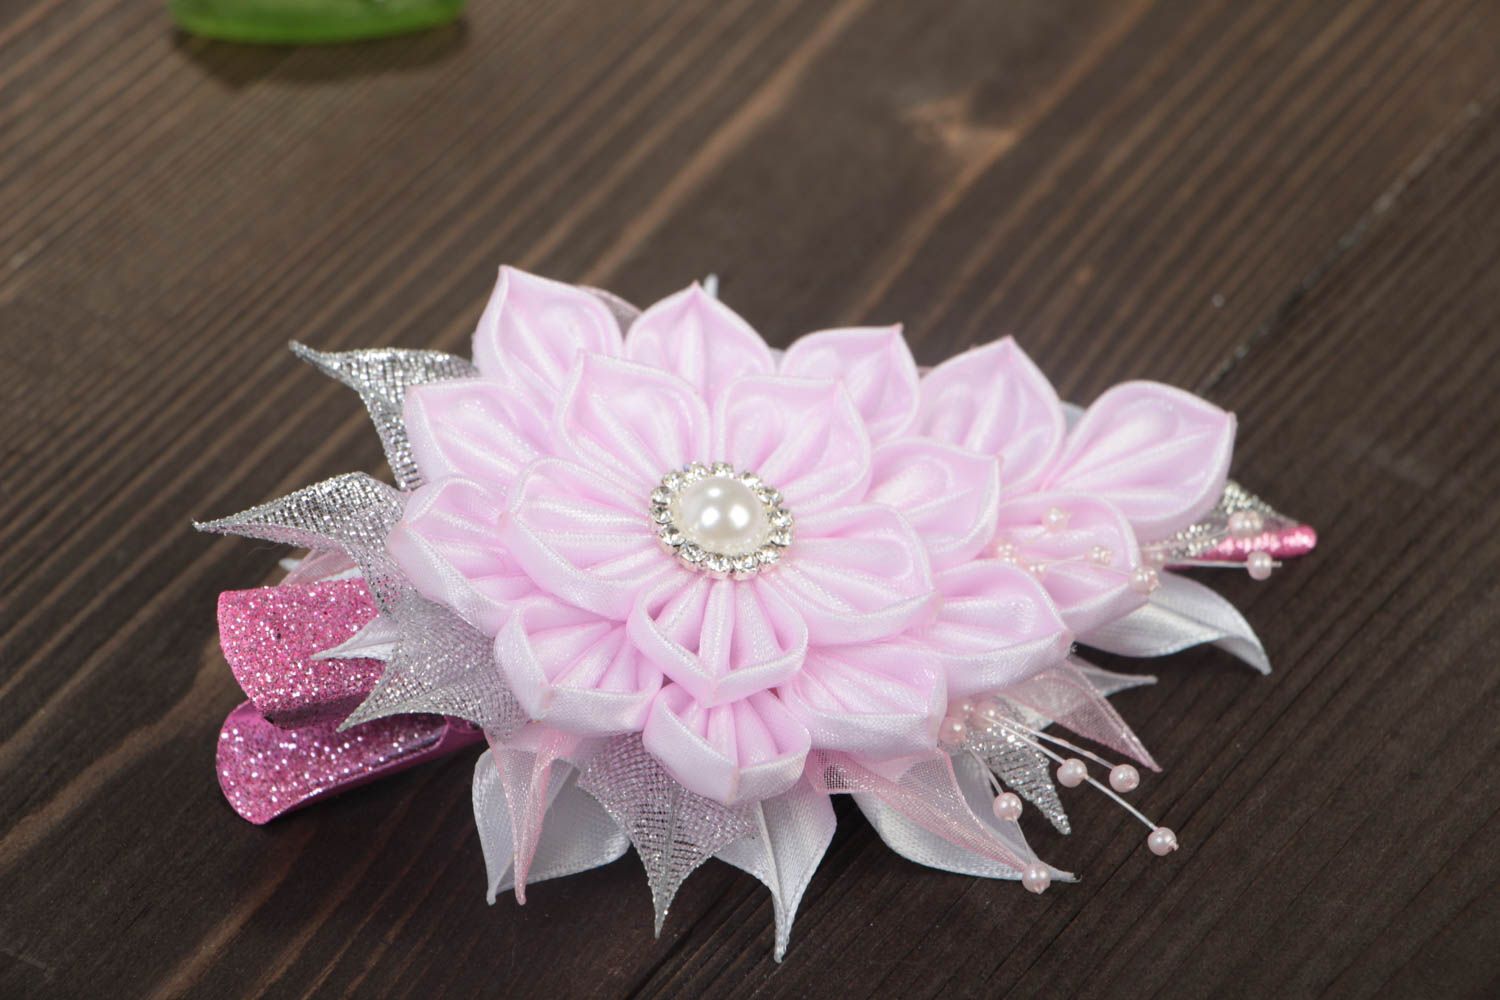 Beautiful homemade flower hair clip designer barrette unusual flowers in hair photo 1